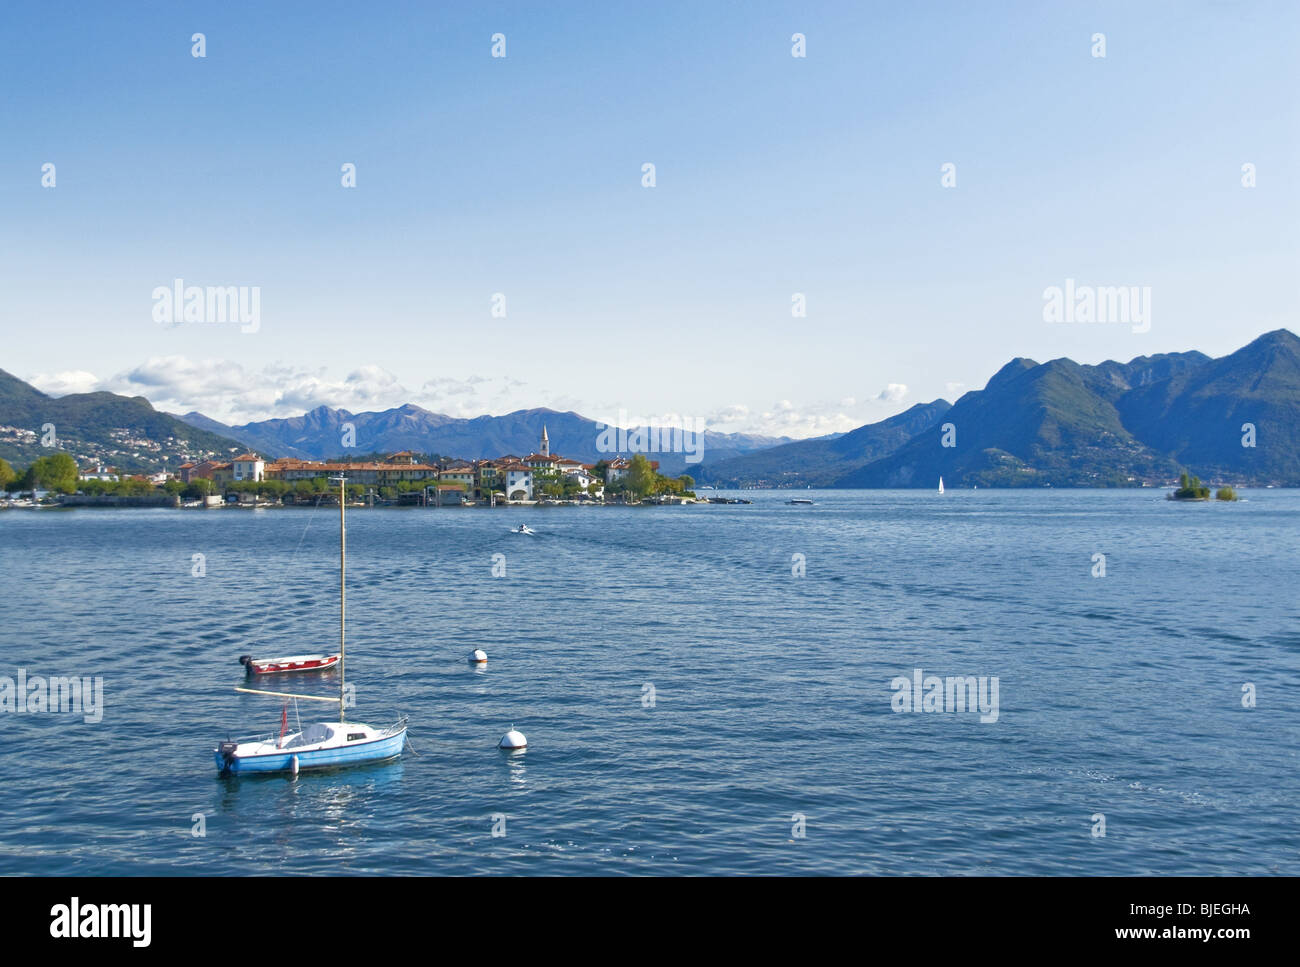 Boote auf dem See Lago Maggiore, Isola dei Pescatori im Hintergrund, Piemont, Italien Stockfoto